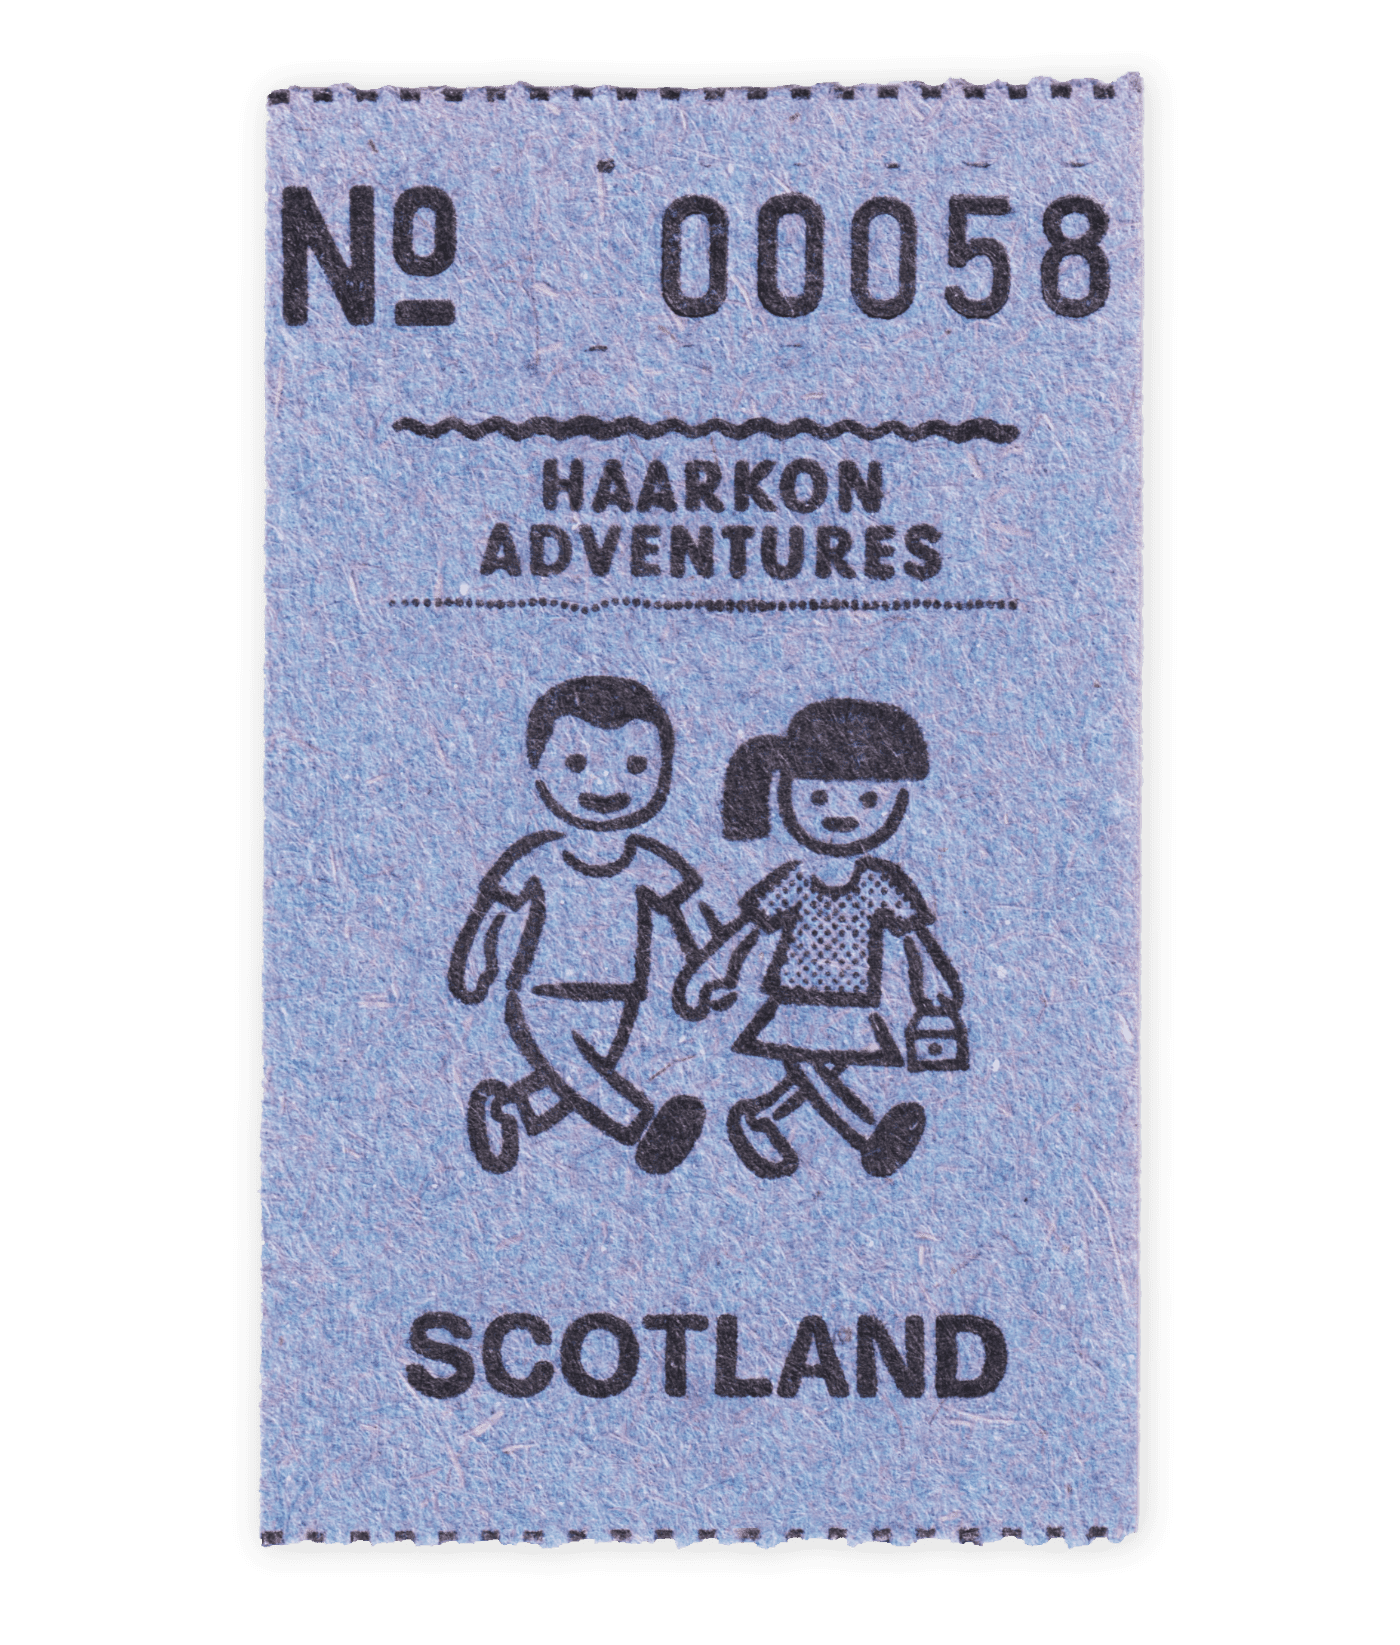 Haarkon Adventures Scotland ticket